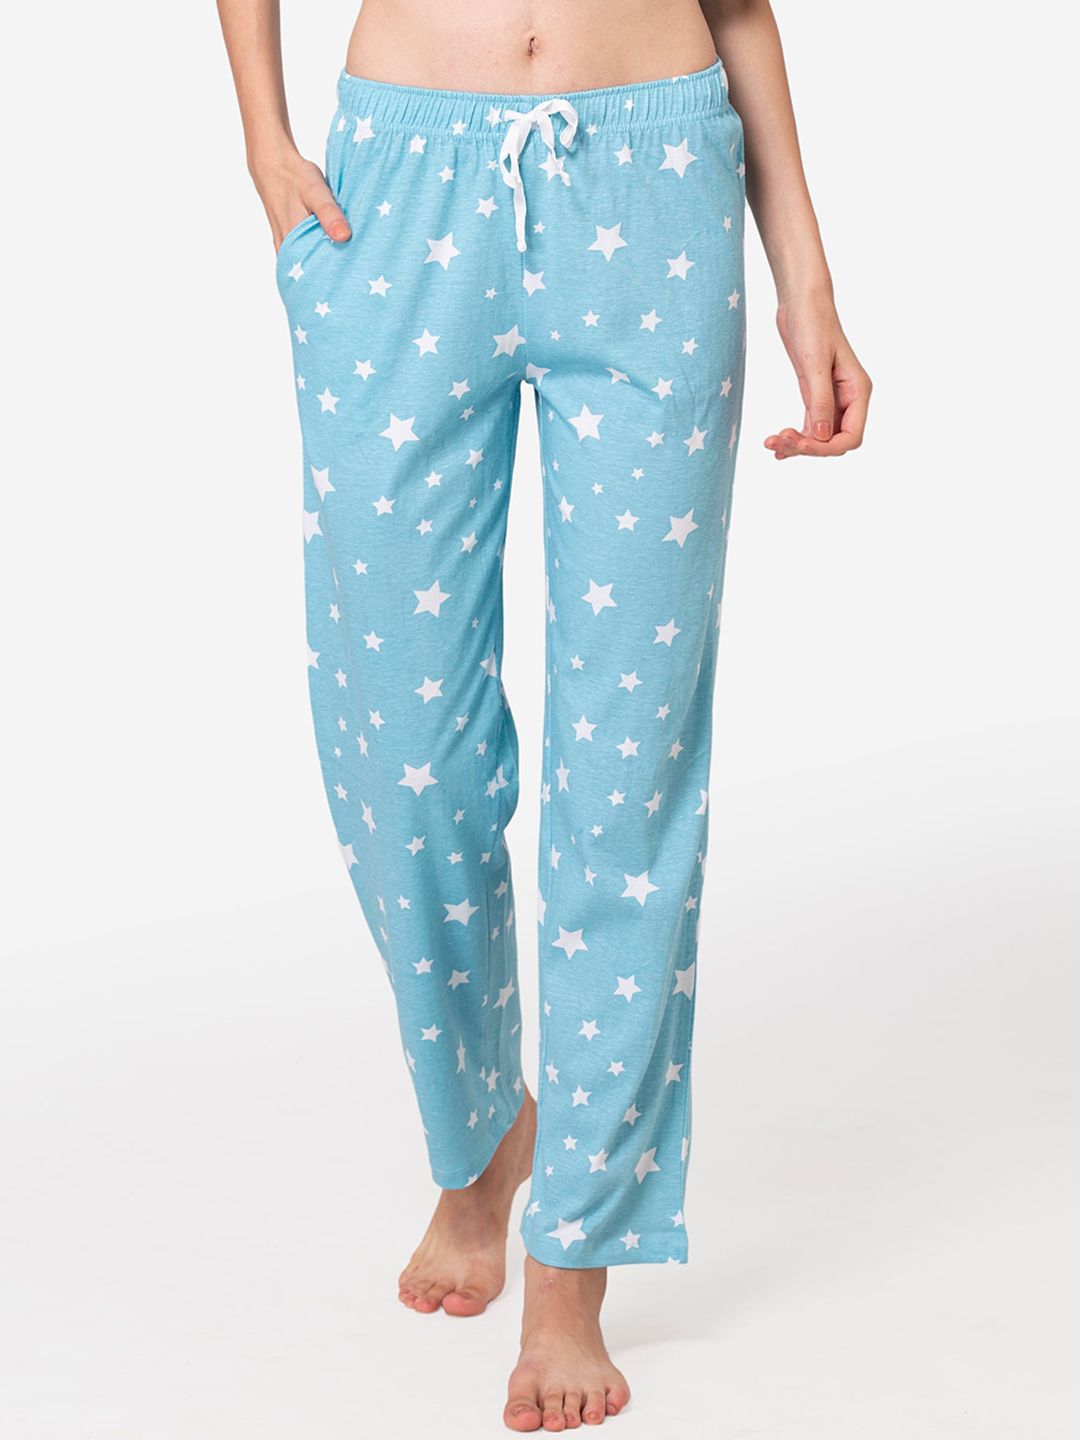 Lounge Dreams Blue Printed Cotton Pyjamas Price in India